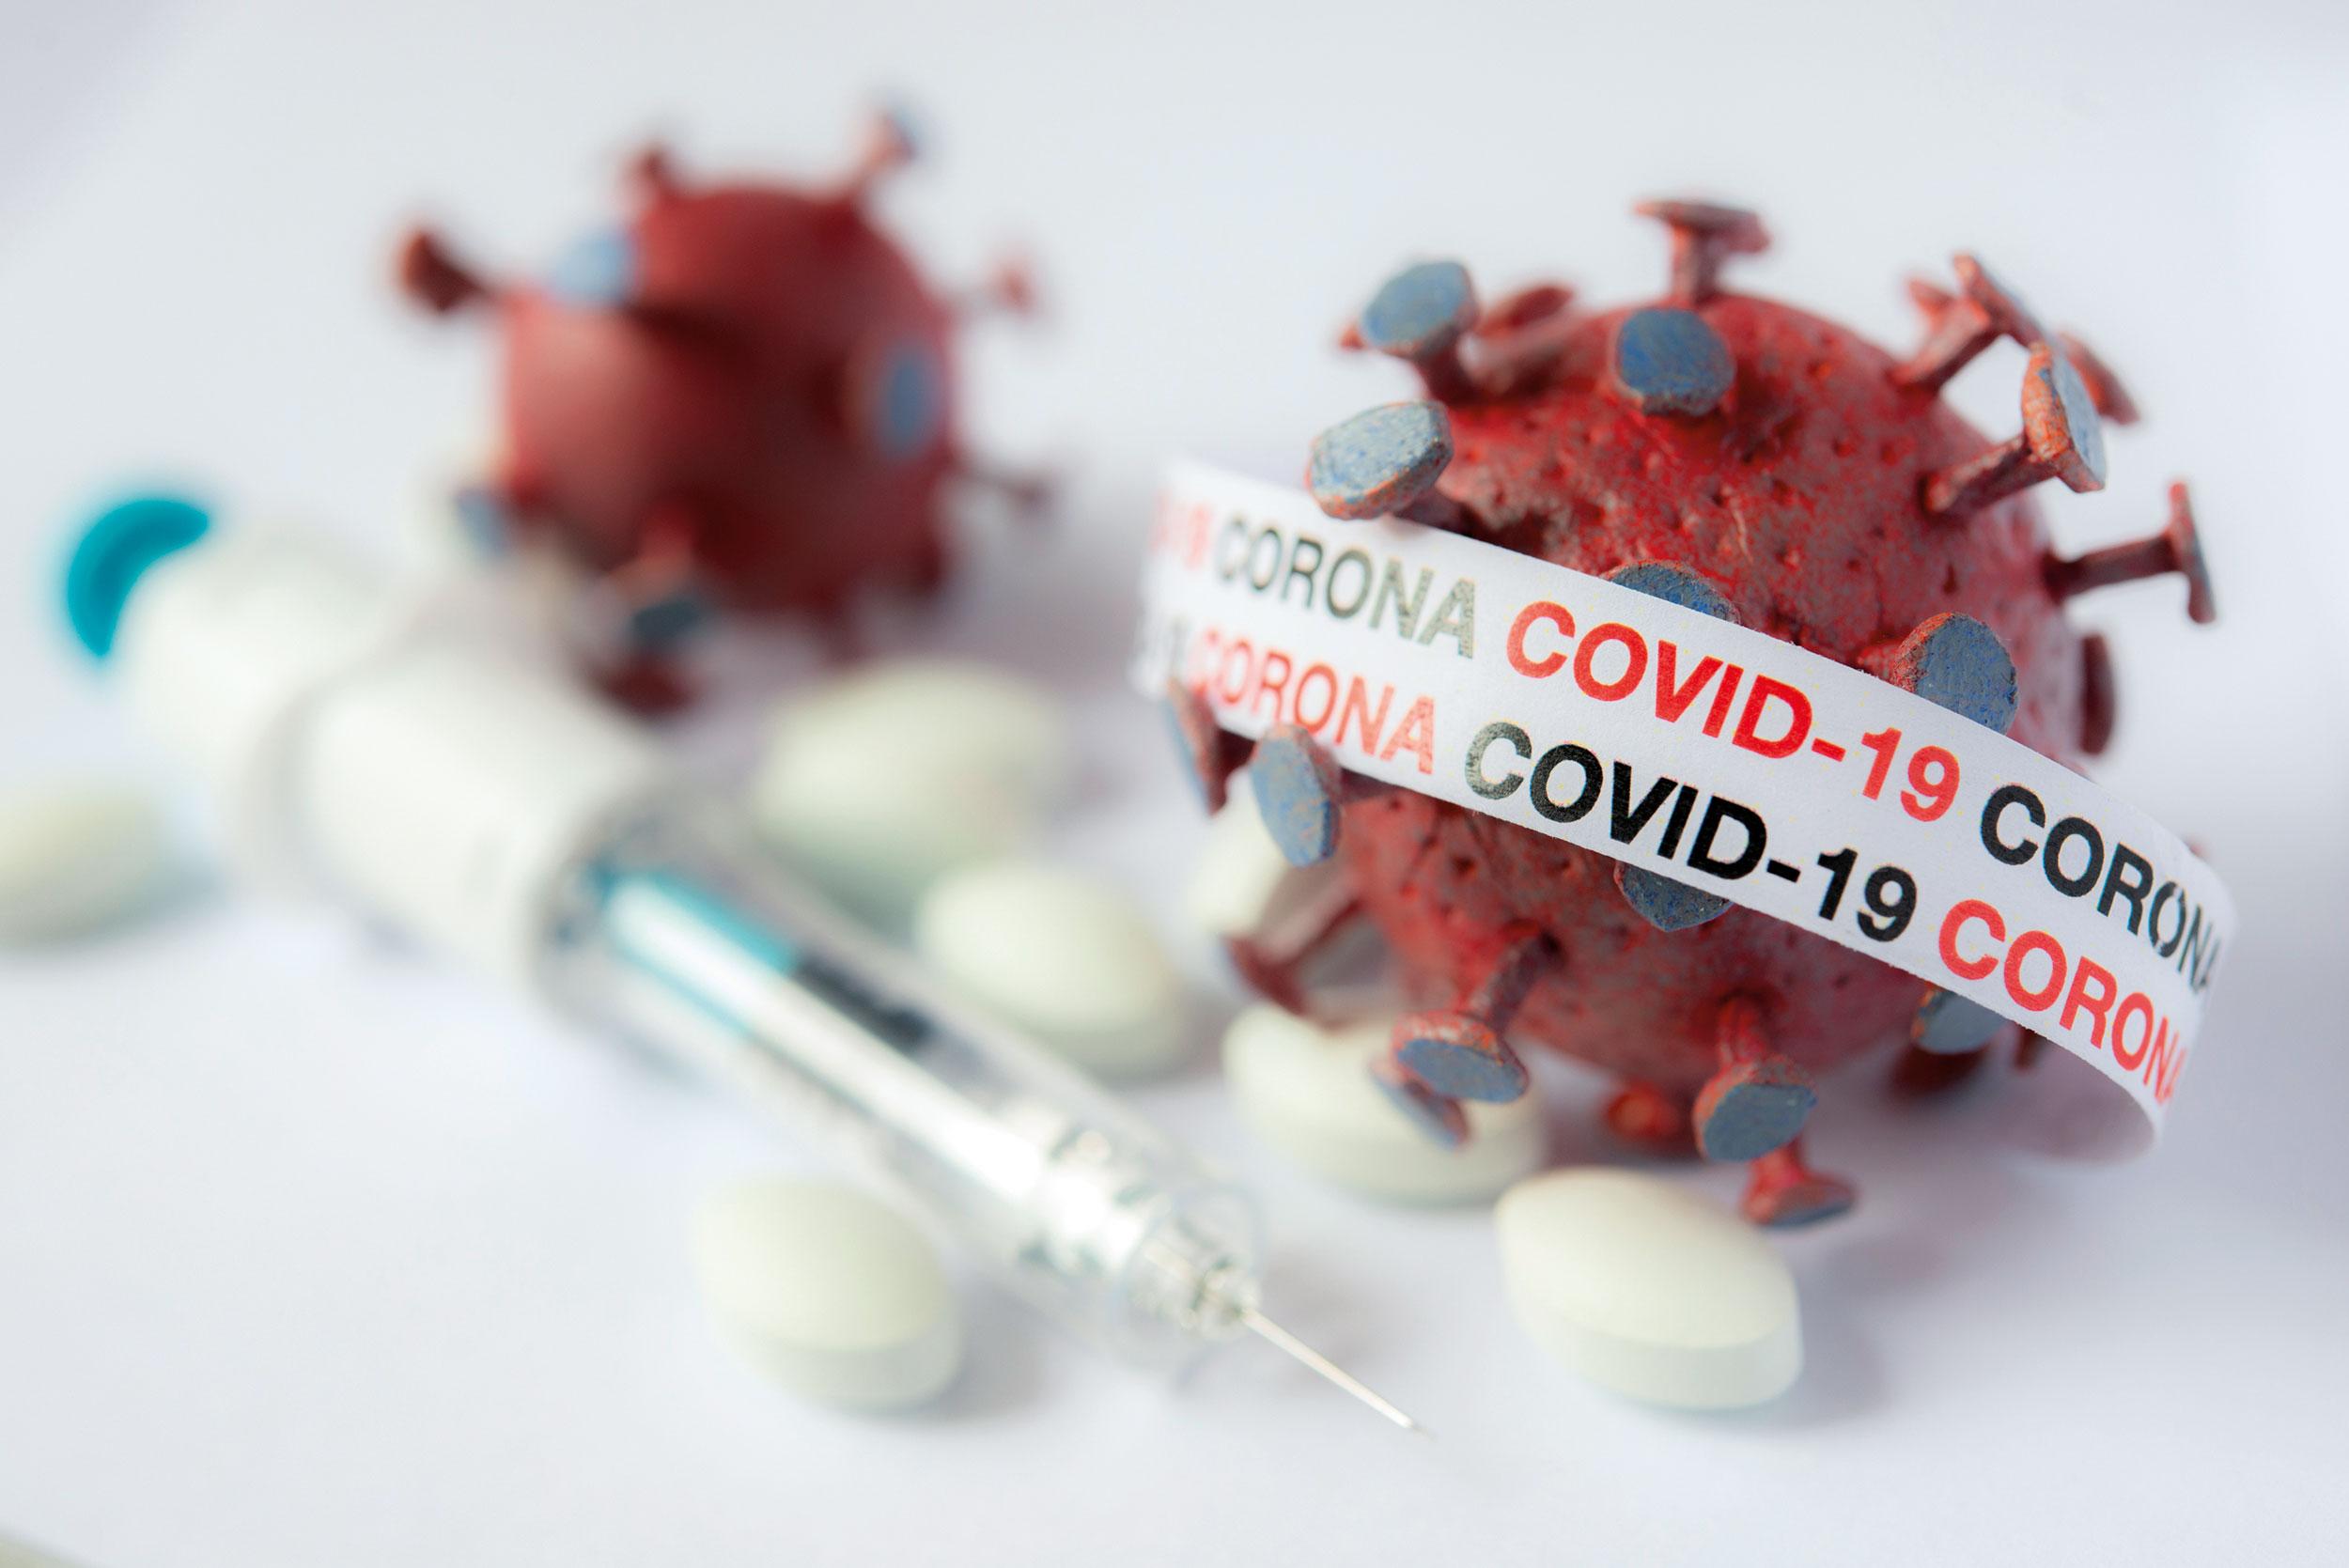 Medizin gegen Coronavirus